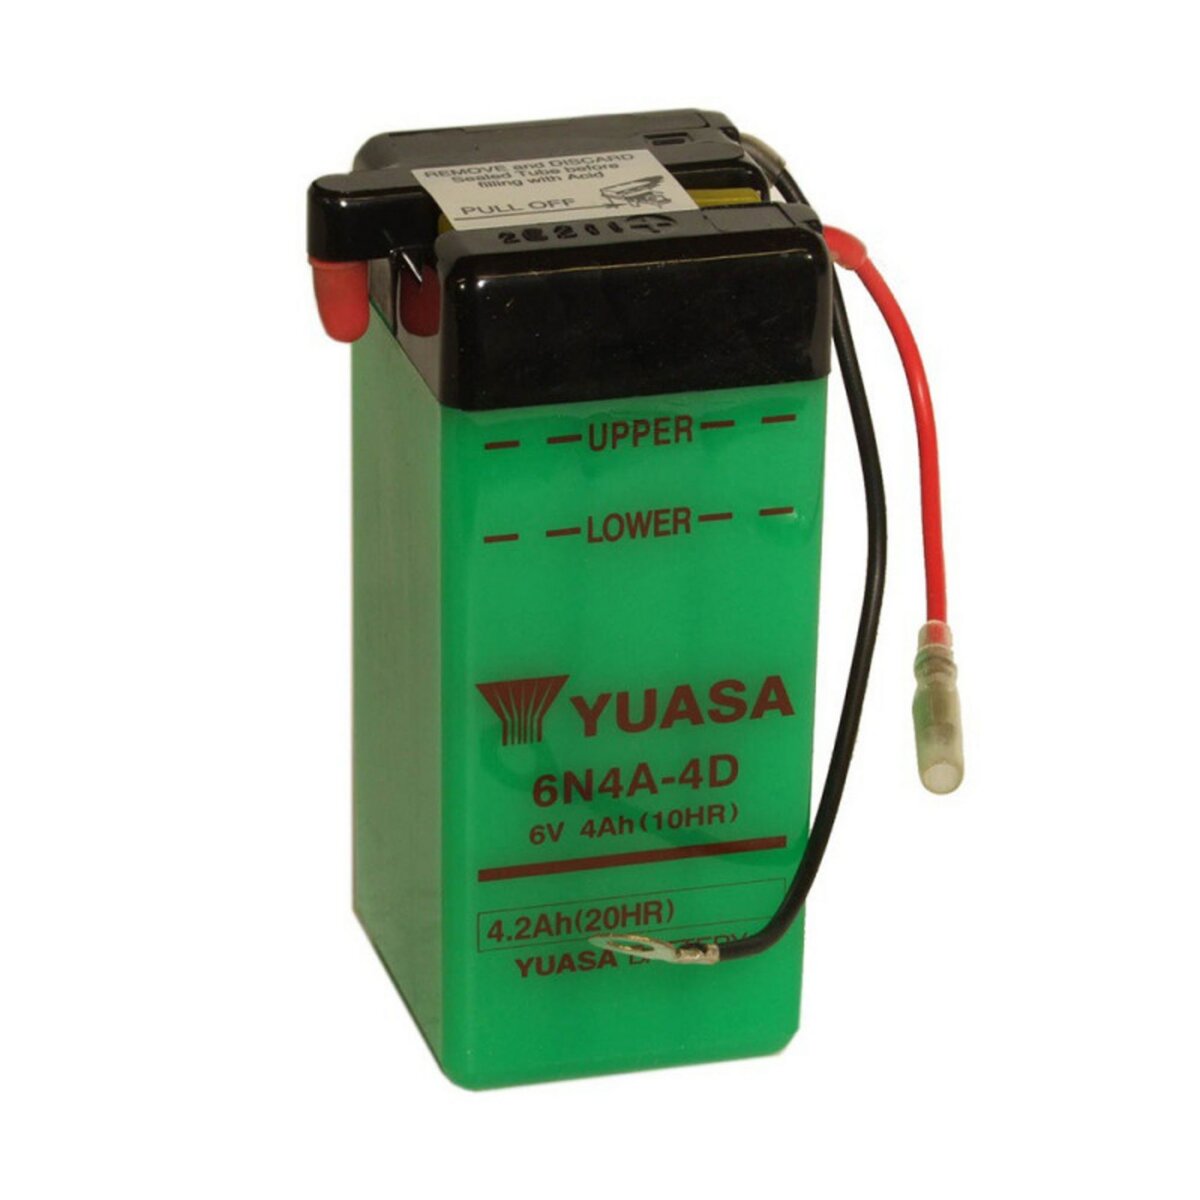 YUASA Batterie moto YUASA 6N4A-4D 6V 4.2AH